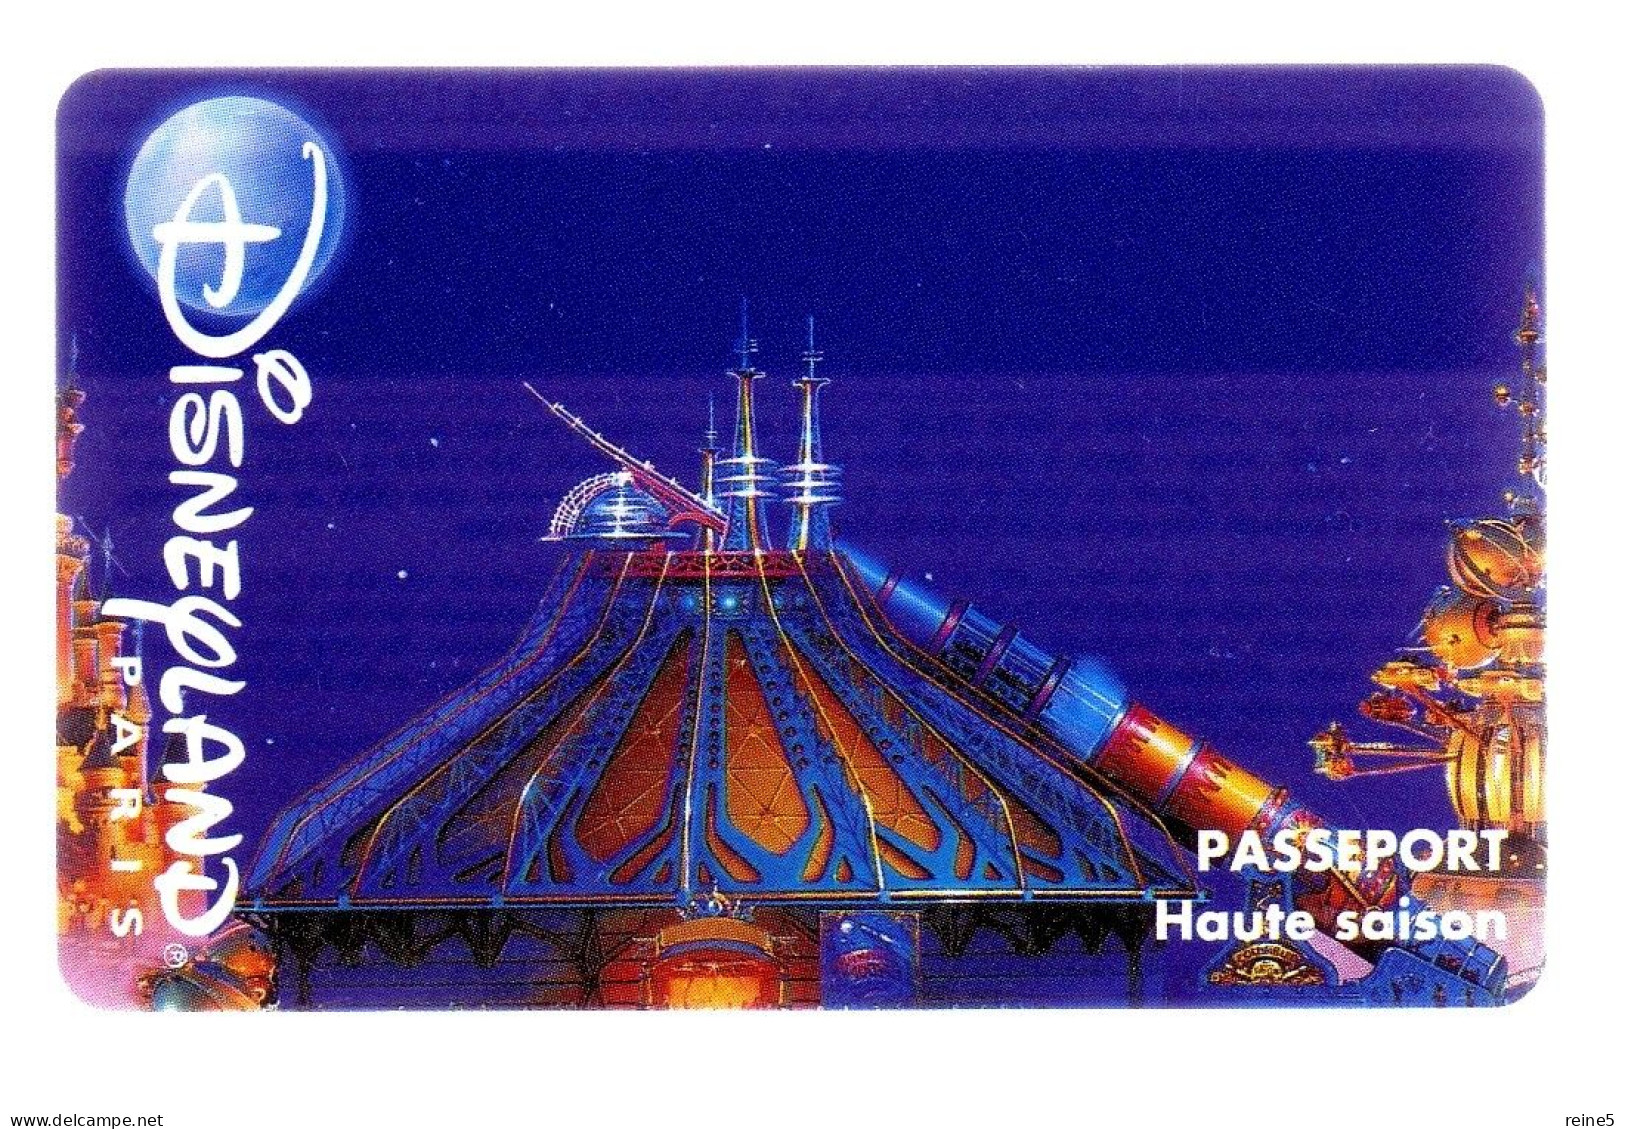 PASSEPORT HAUTE SAISON DISNEYLAND PARIS -TRES BON ETAT -REF-PASS DISNEY-15 - Pasaportes Disney